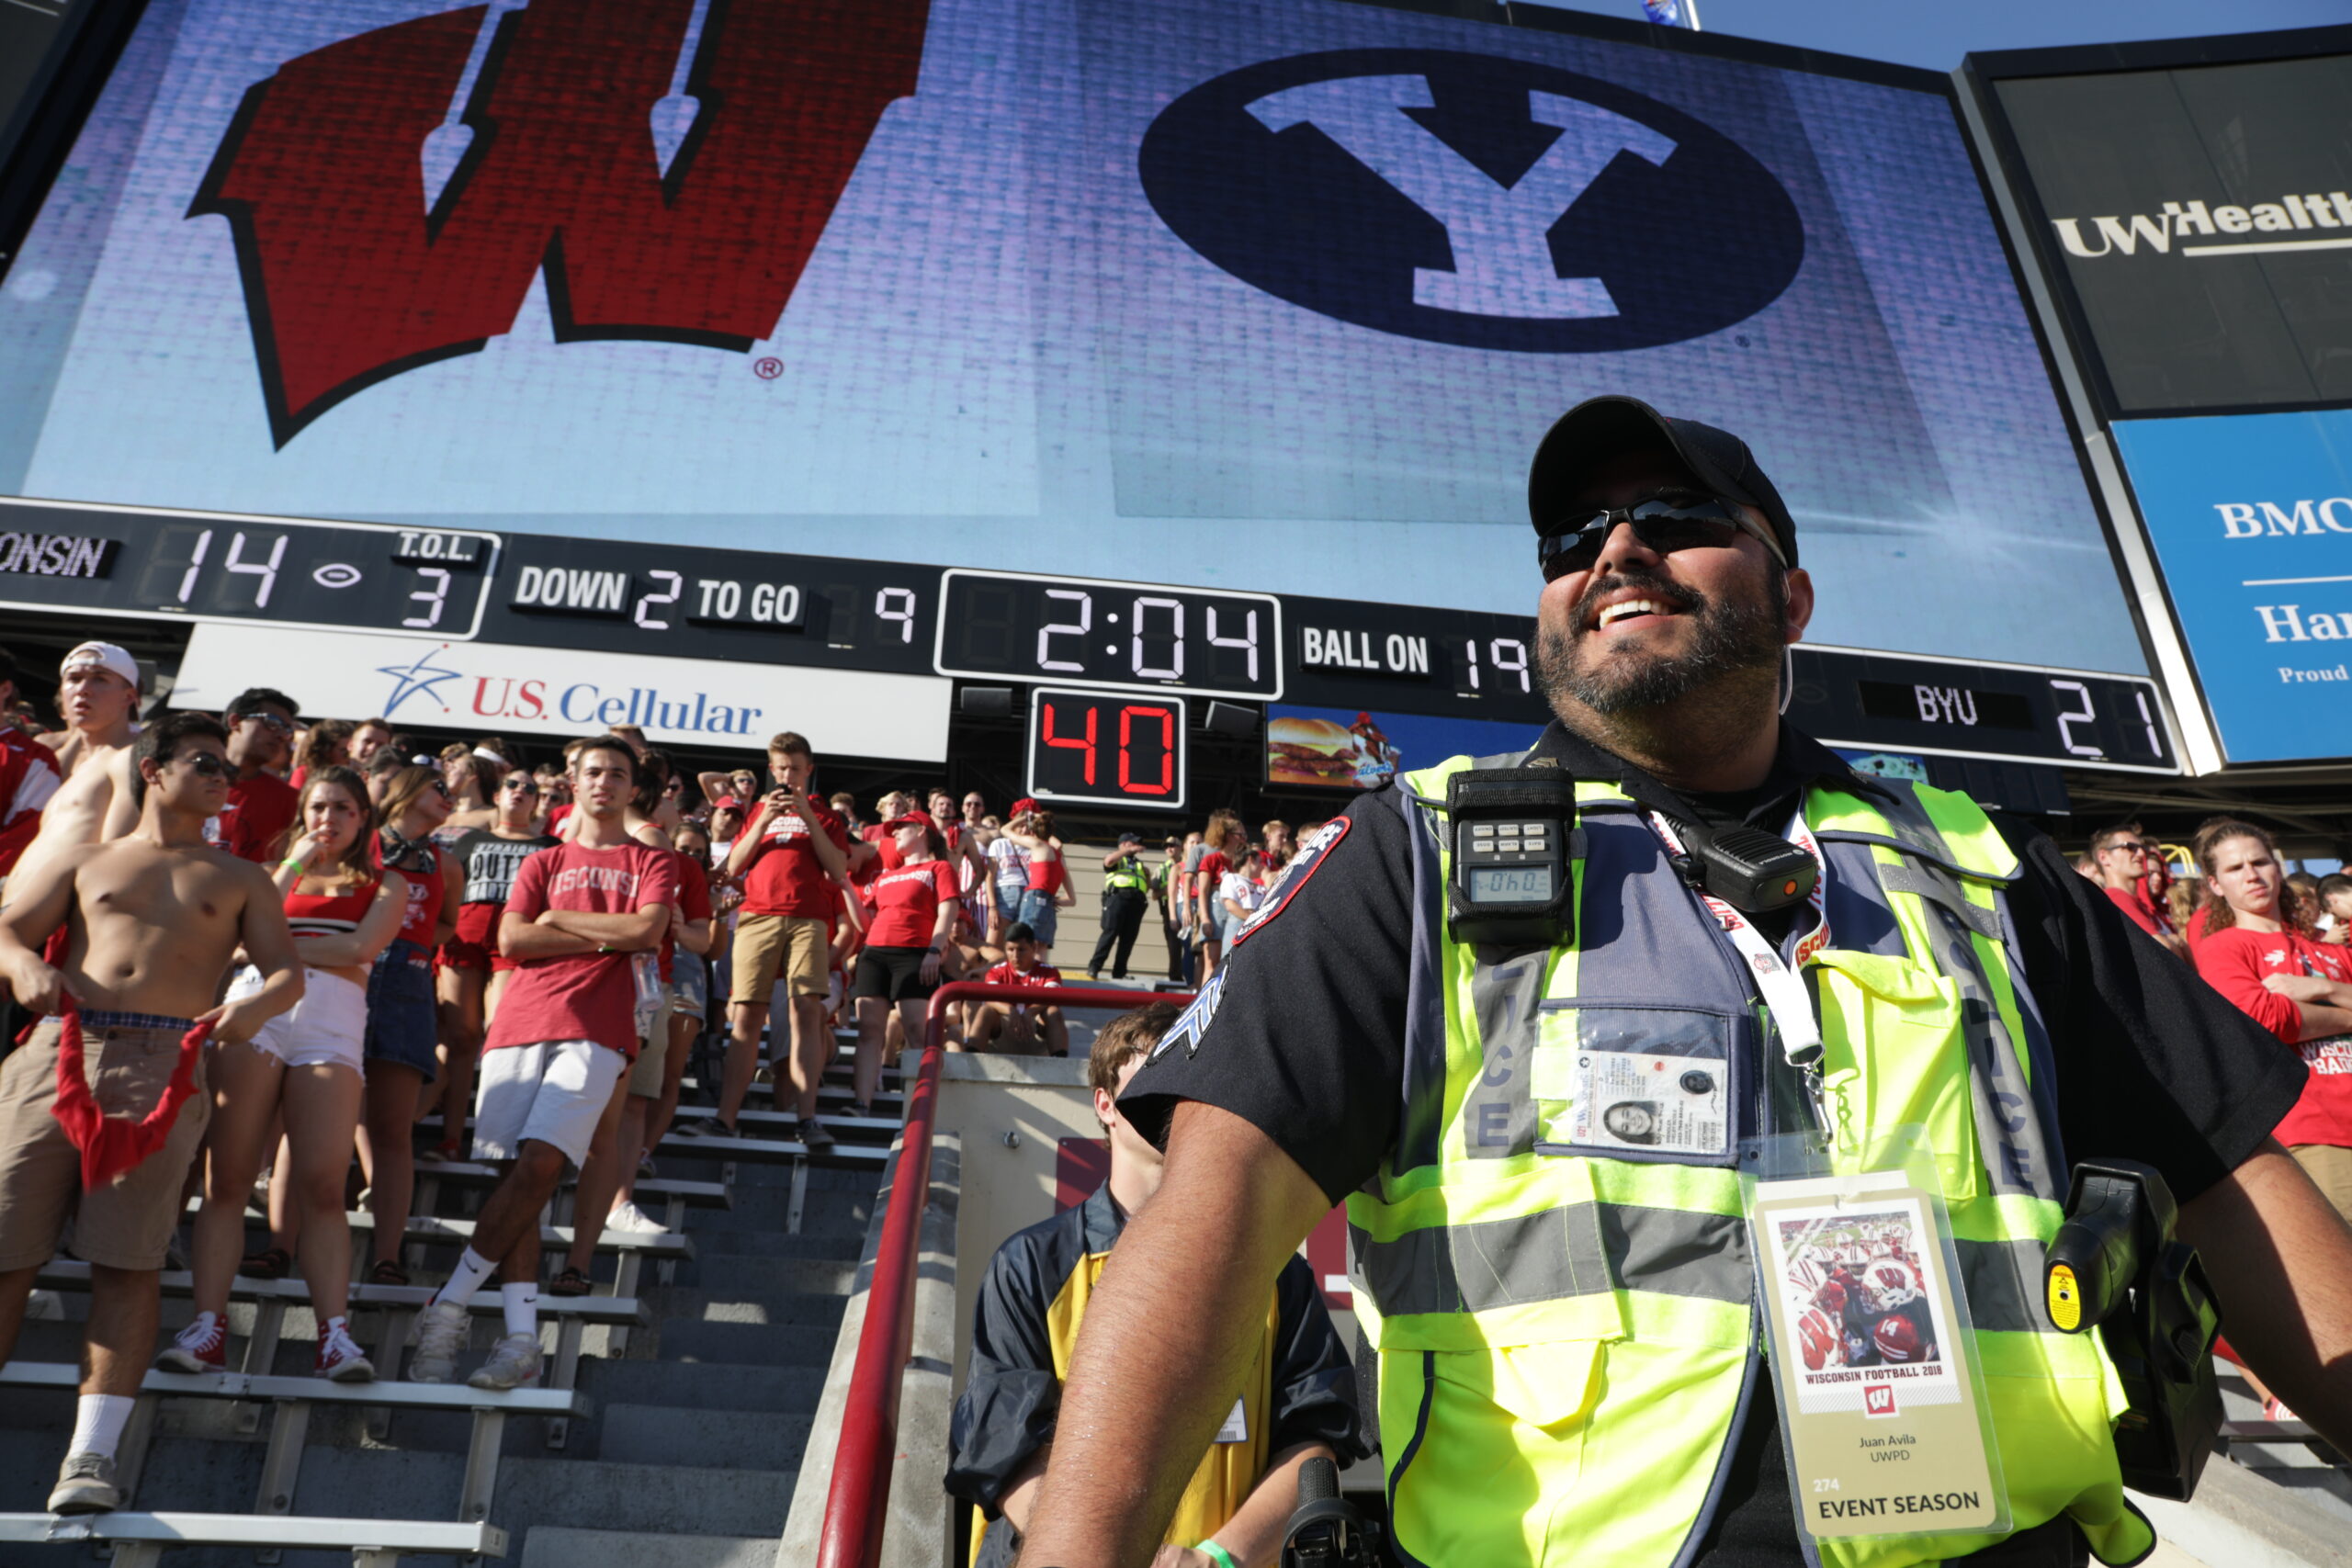 A photo of Sgt. Juan Avila providing security at a UW football game.